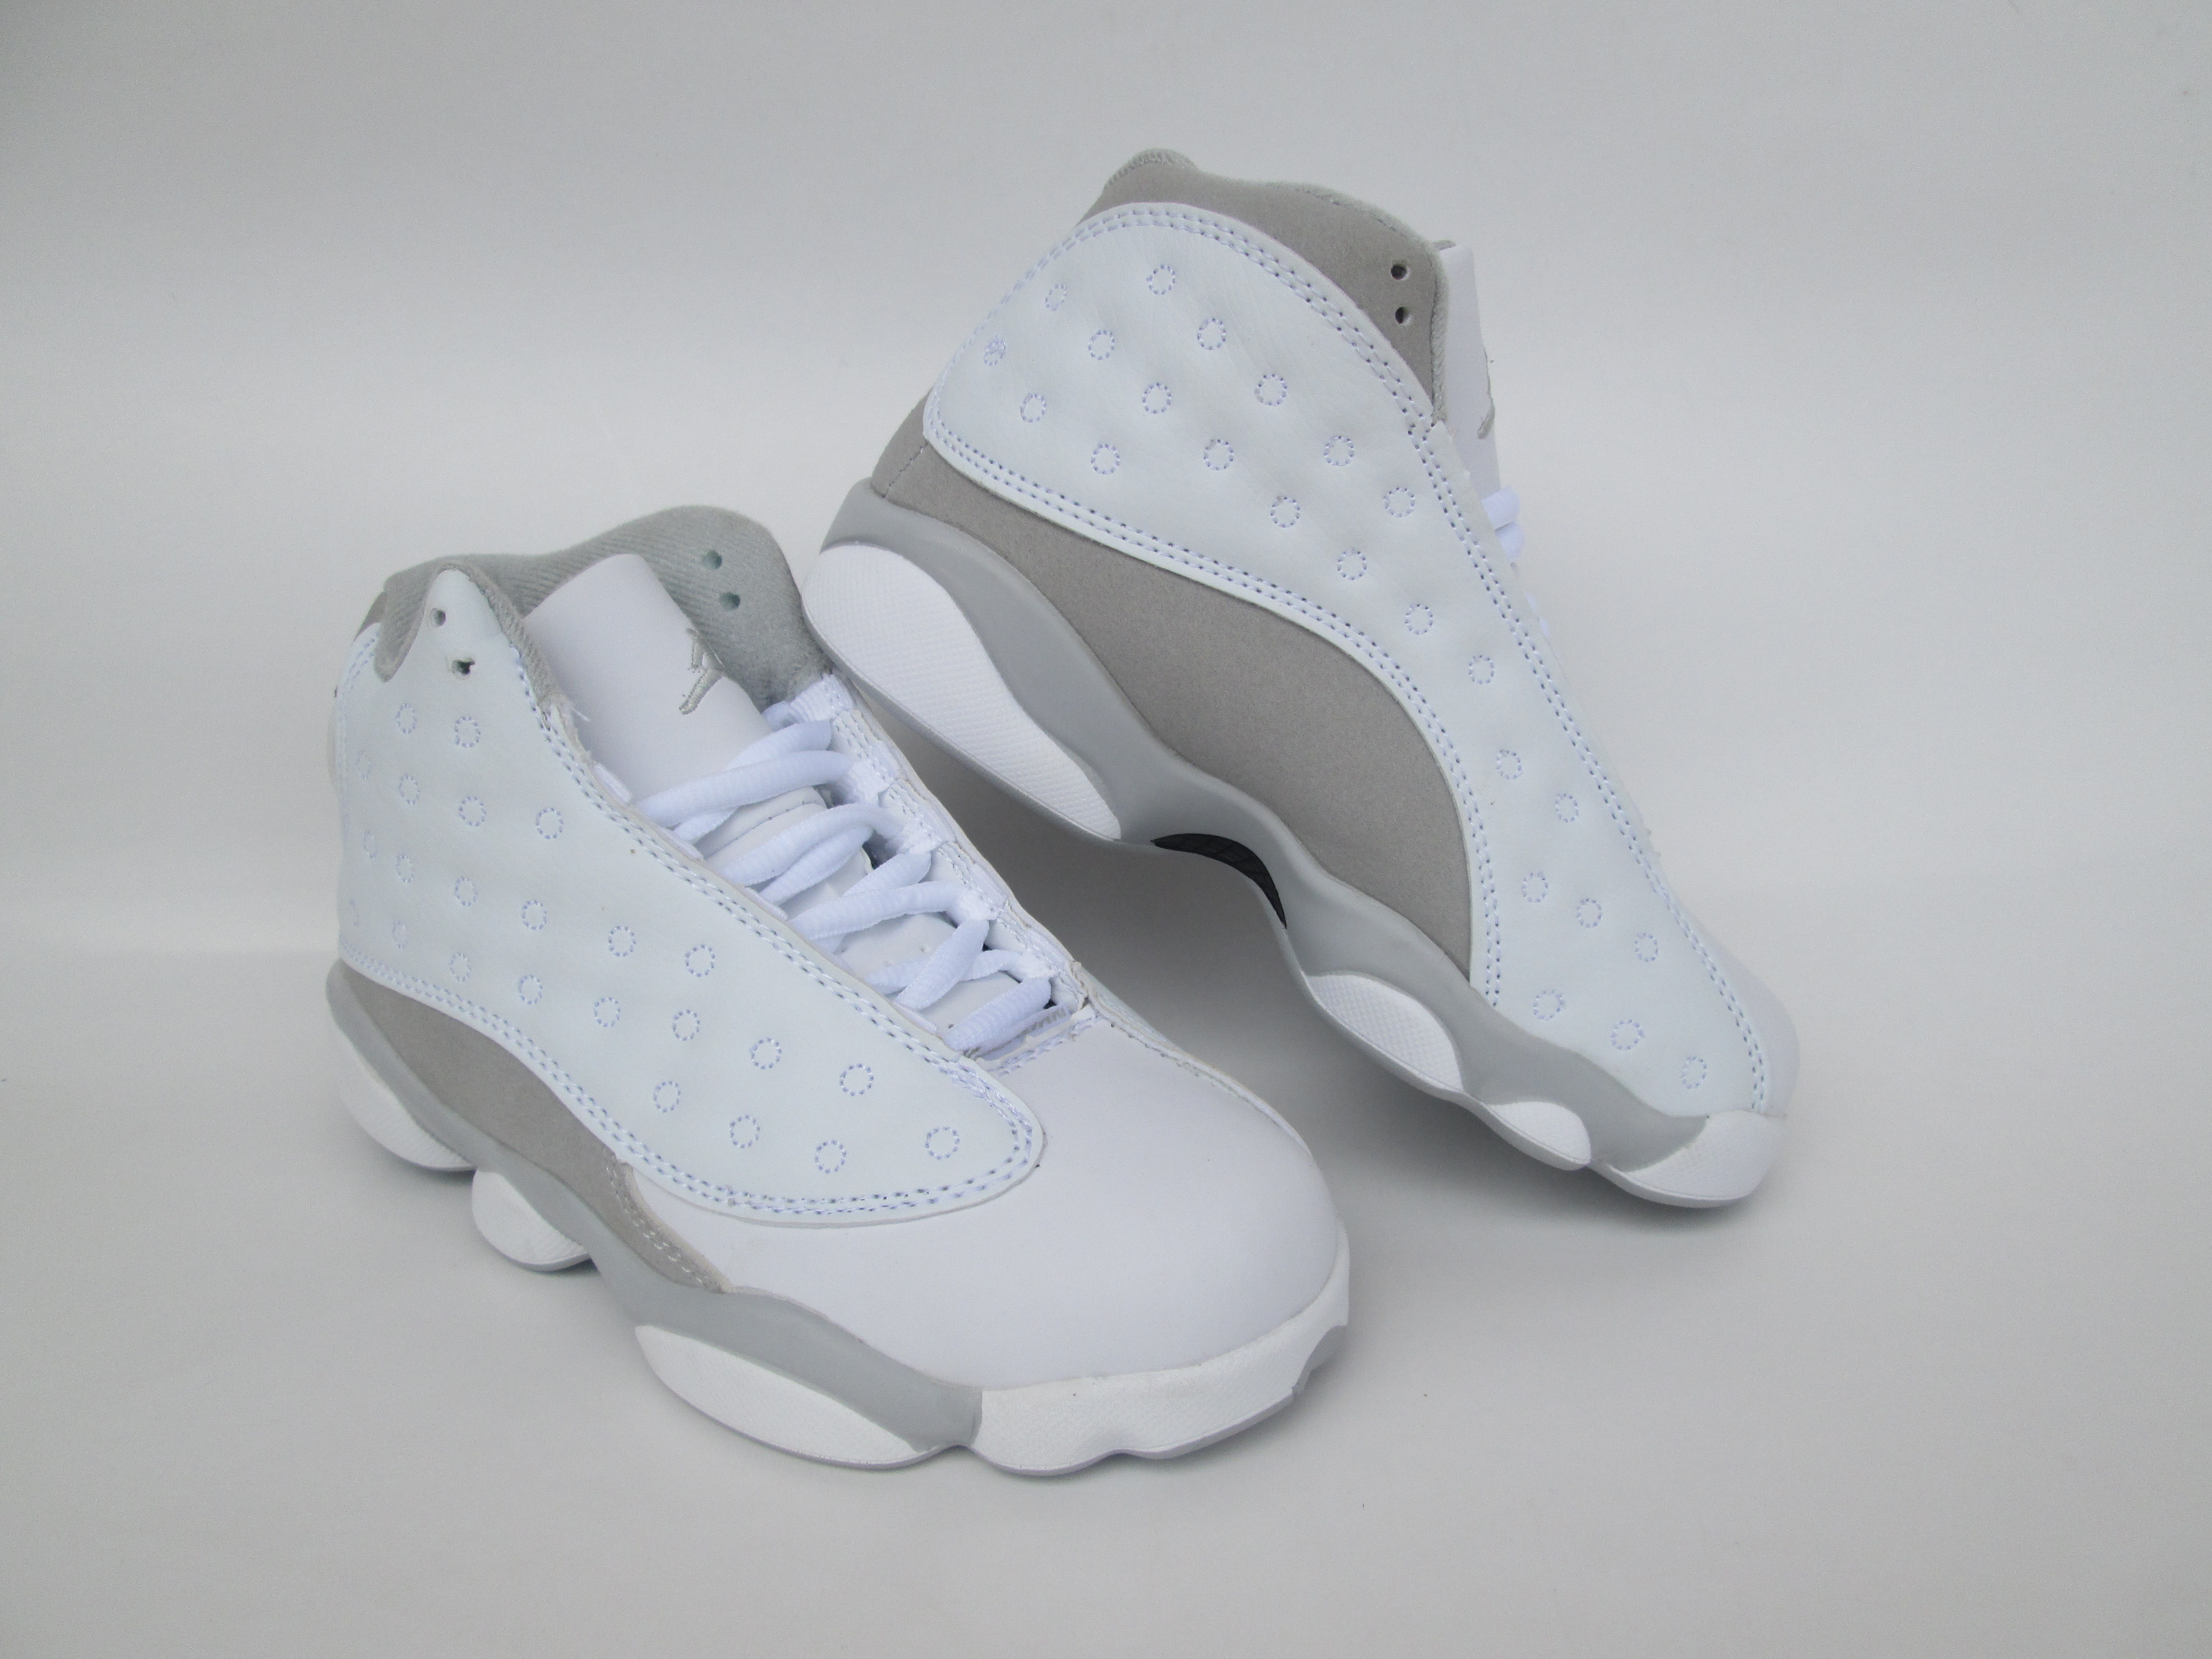 New Air Jordan 13 Deep White Grey Shoes For Kids